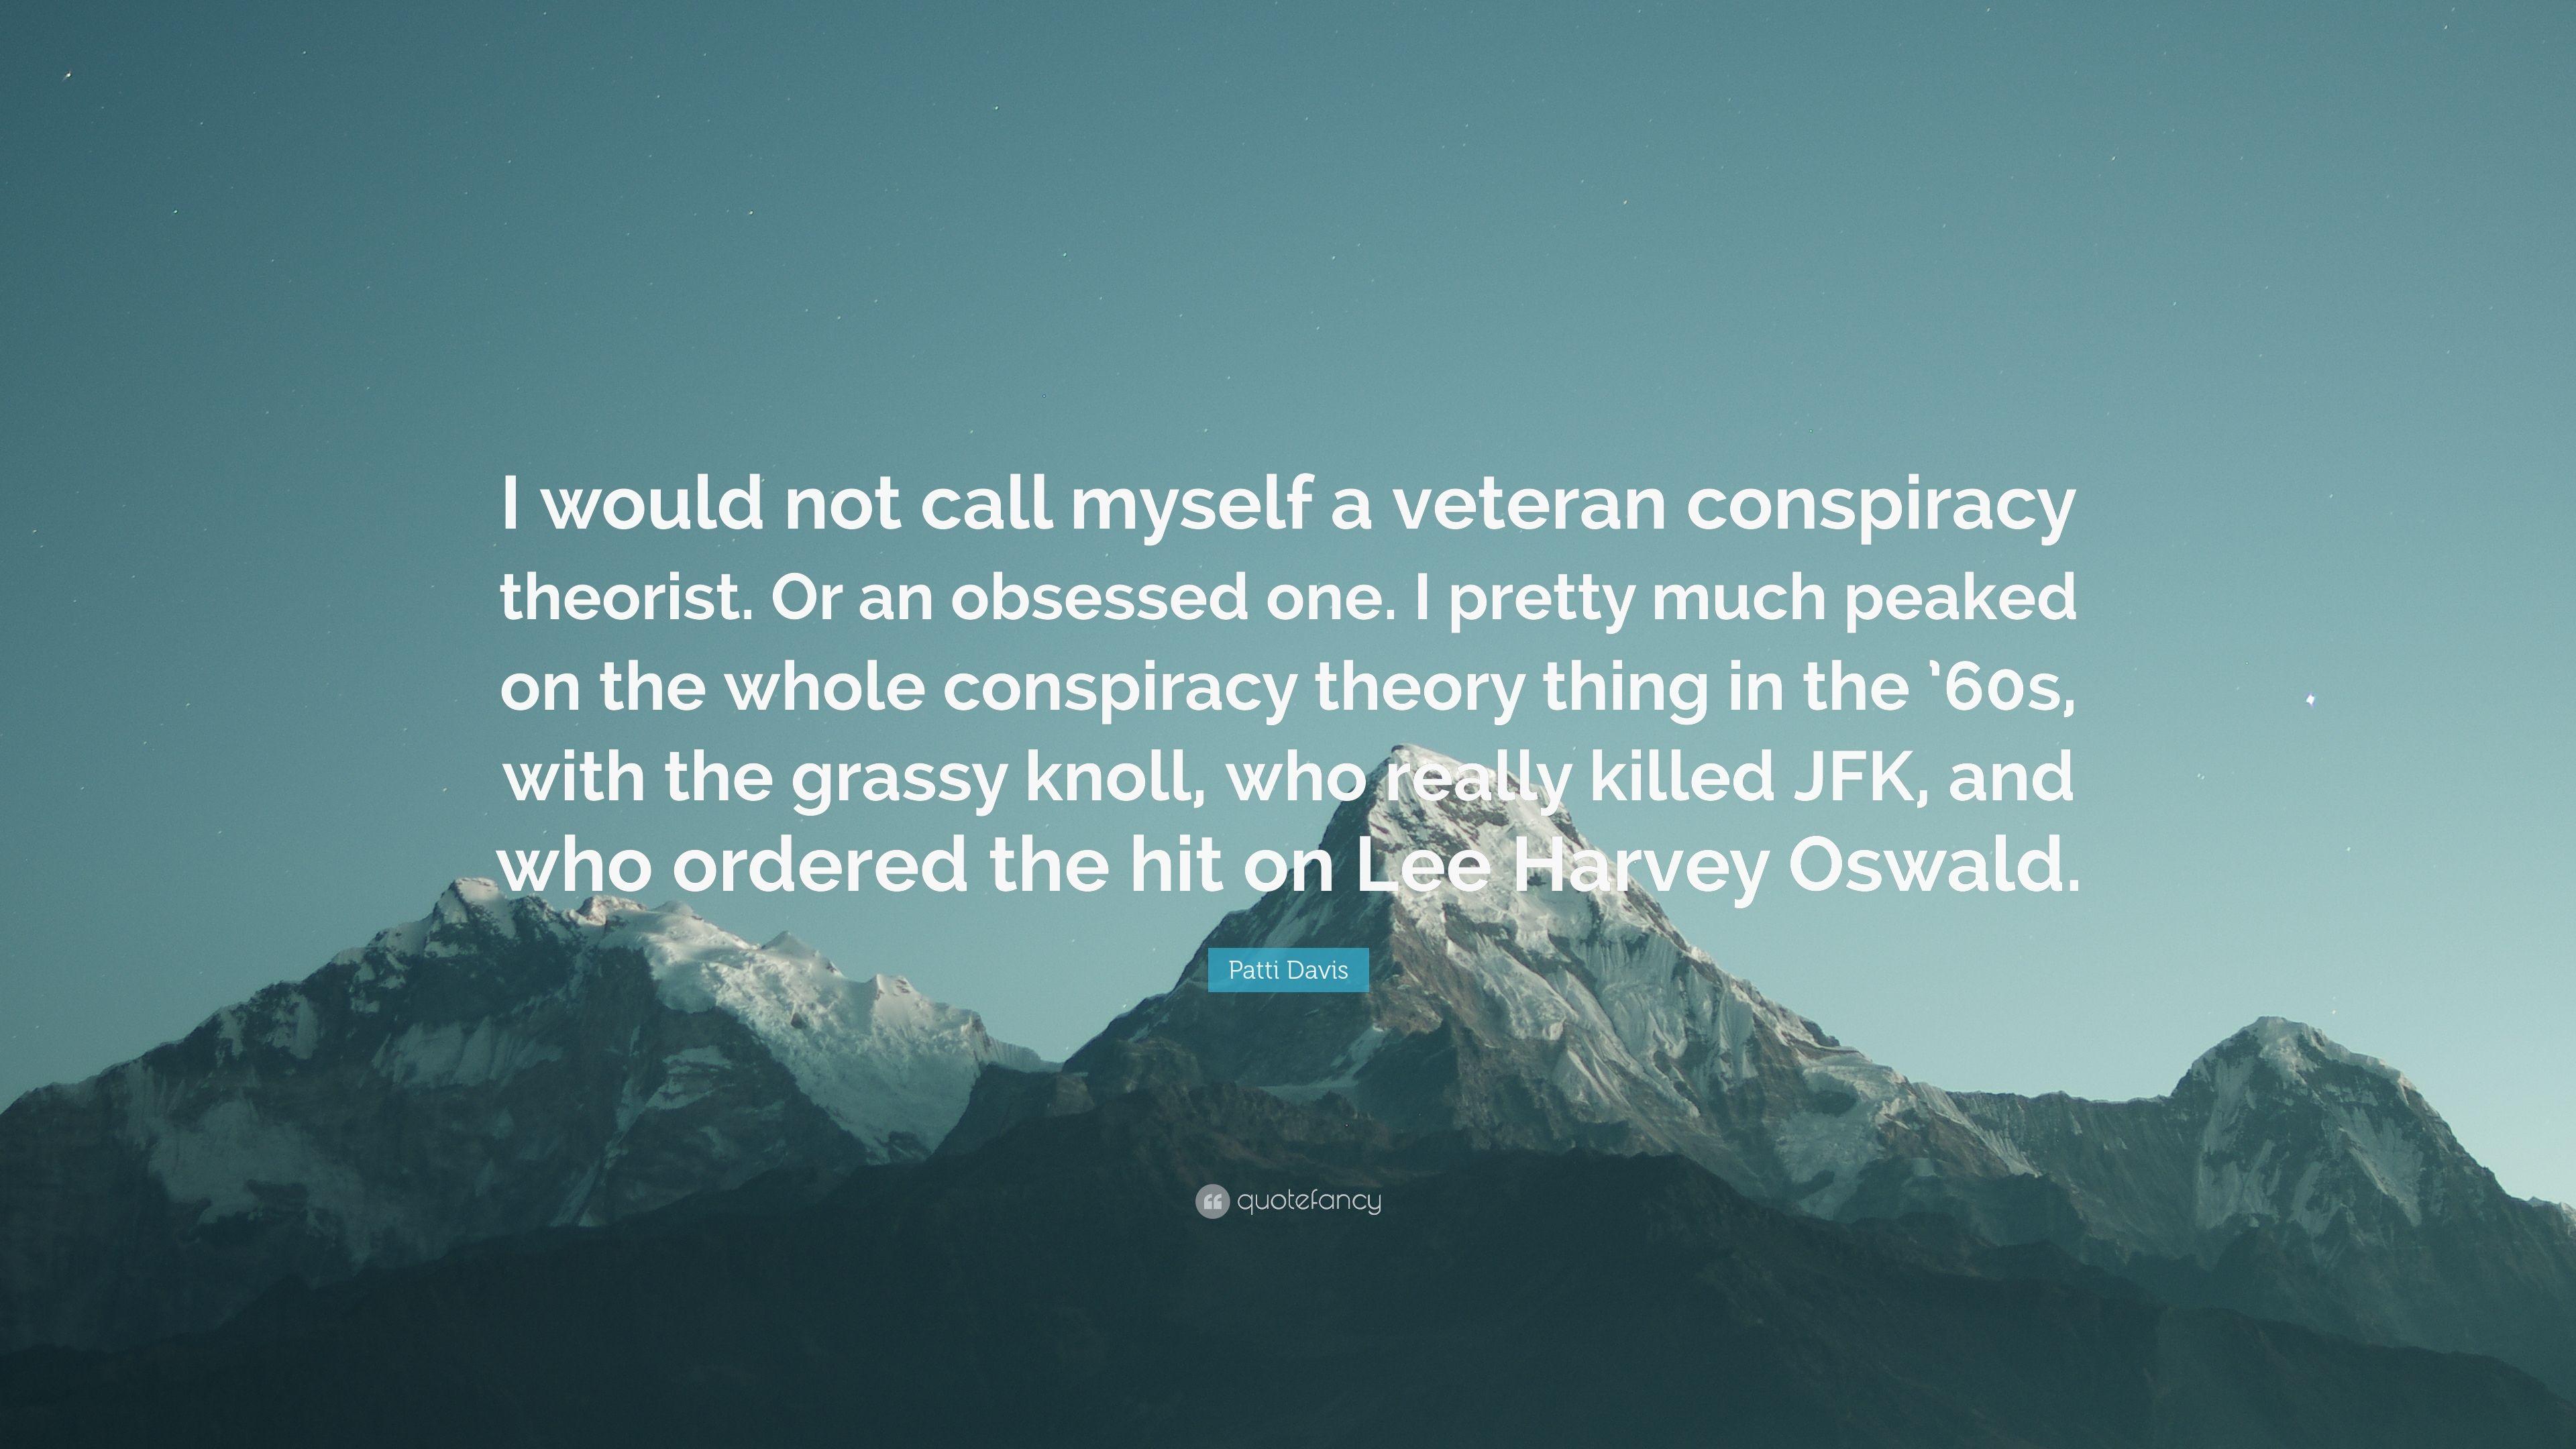 Patti Davis Quote: “I would not call myself a veteran conspiracy